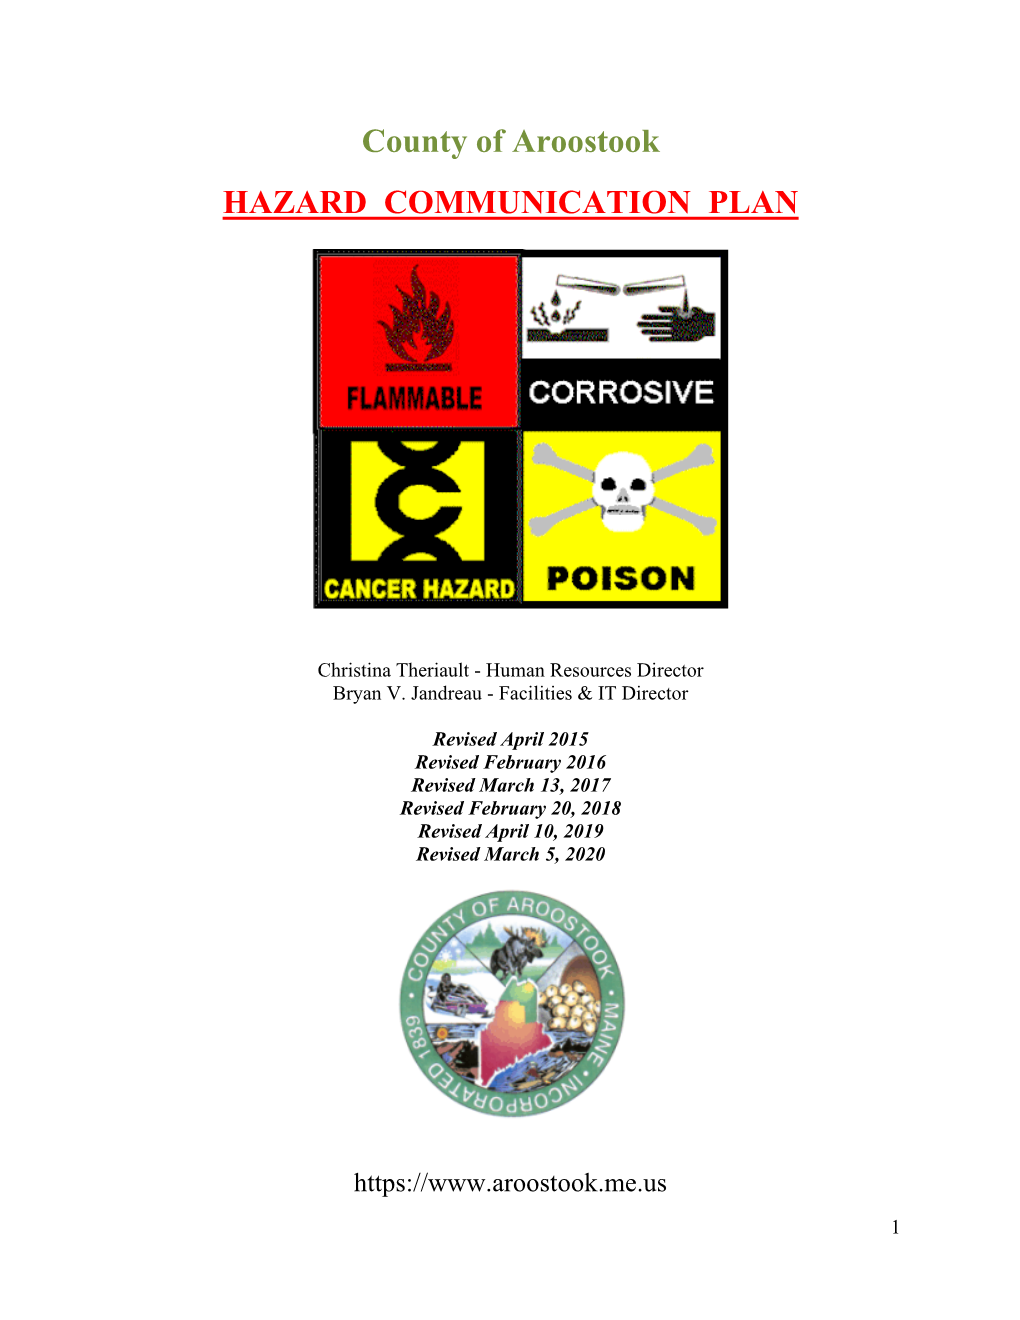 County of Aroostook HAZARD COMMUNICATION PLAN